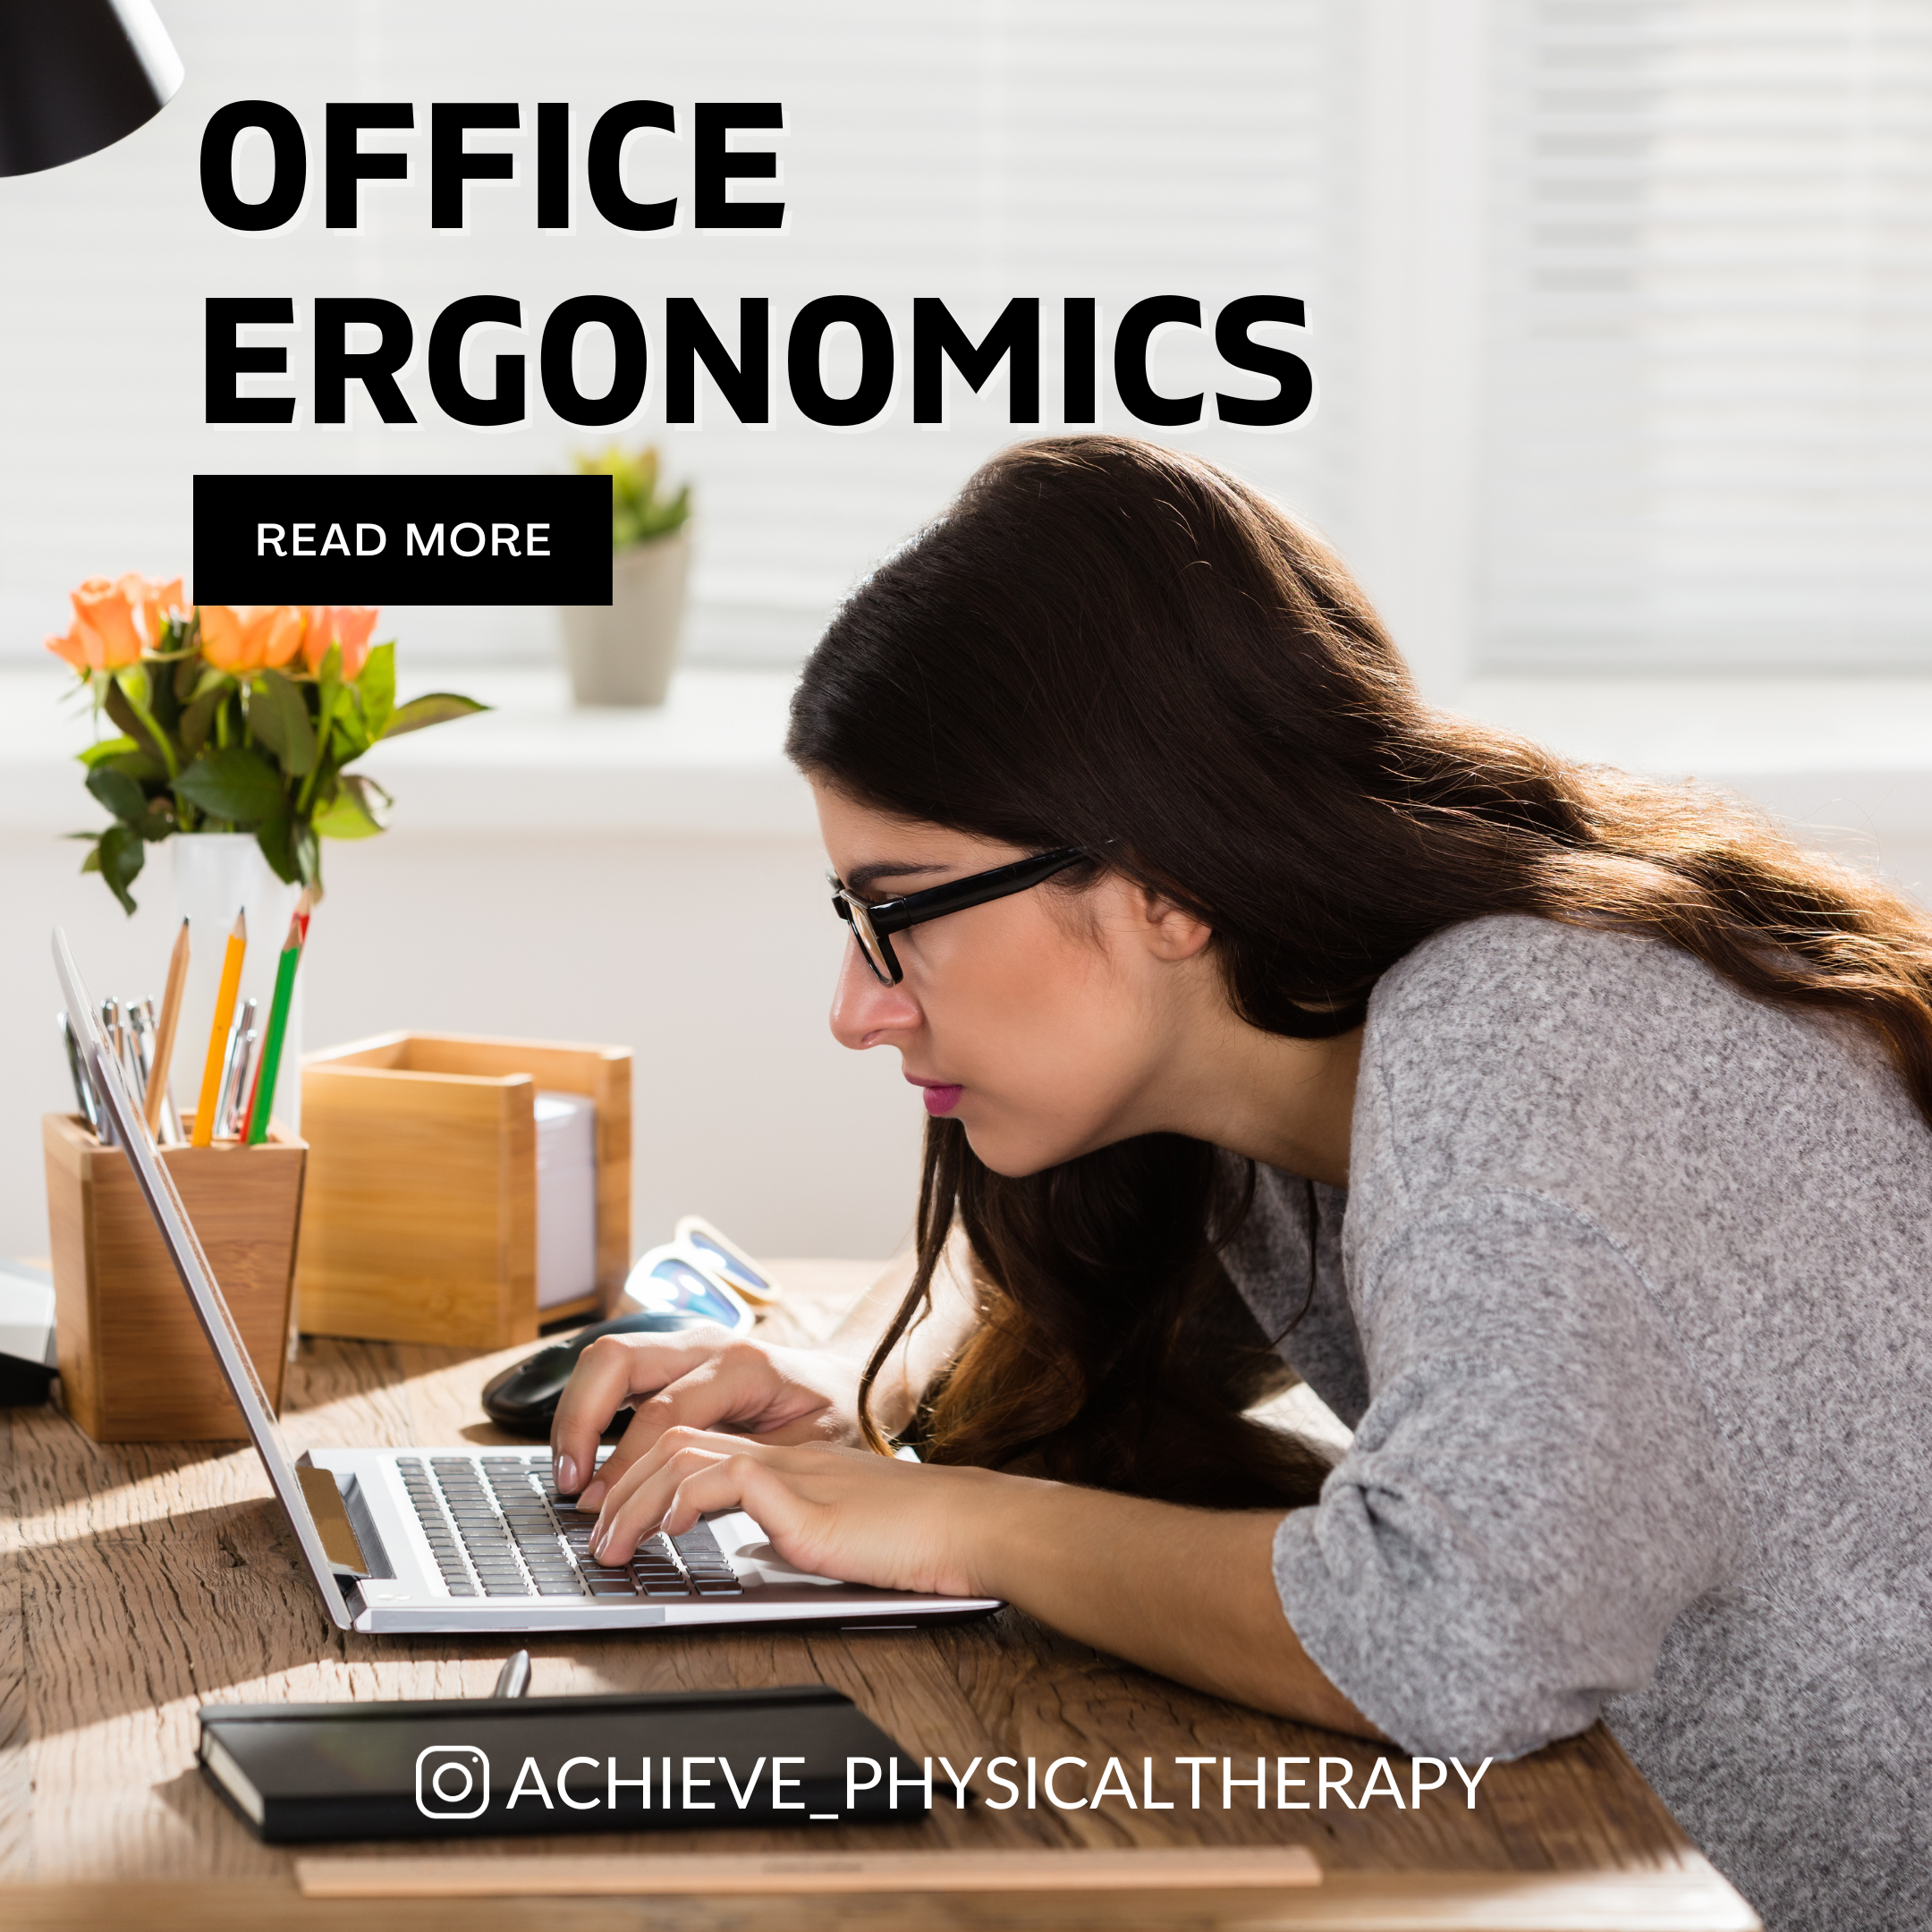 work ergonomics, office ergonomics, good posture